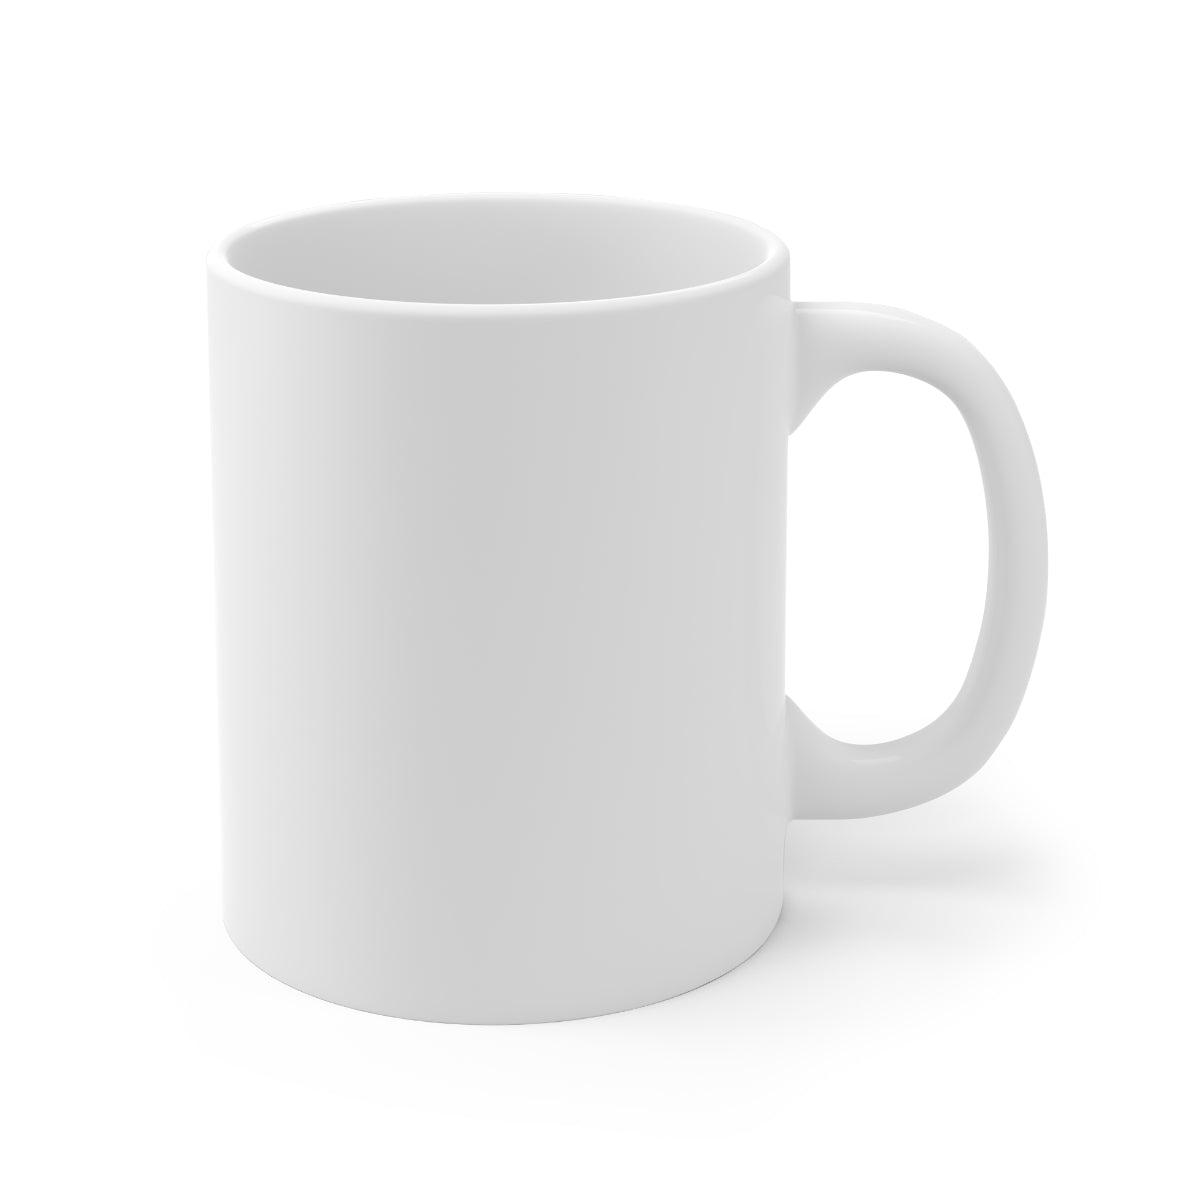 You’re Approvals Not Need Ceramic Mug 11oz